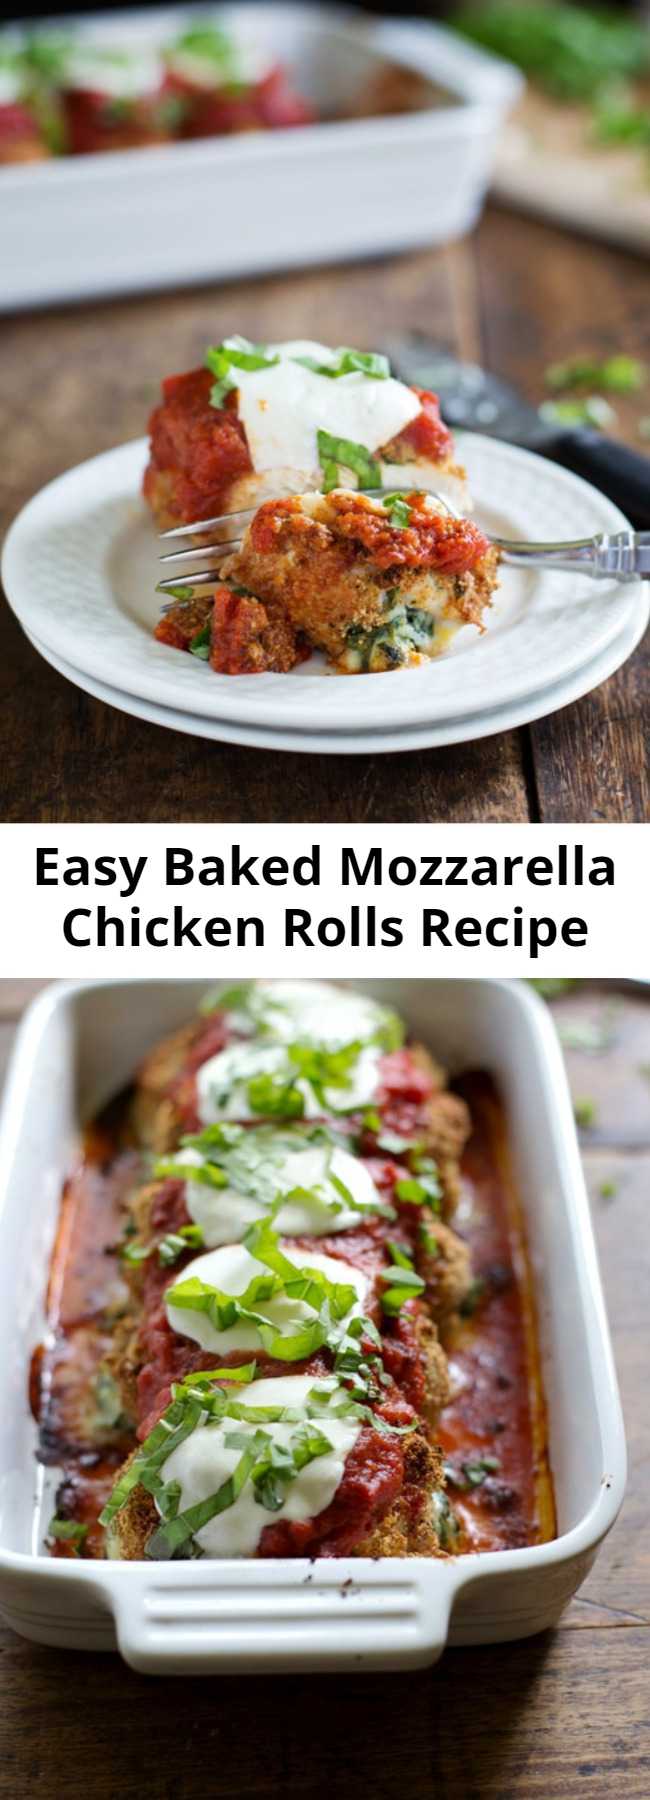 Easy Baked Mozzarella Chicken Rolls Recipe - This recipe for Baked Mozzarella Chicken Rolls is easy, delicious, and beautiful! #healthy #dinner #chickenrecipe #recipe